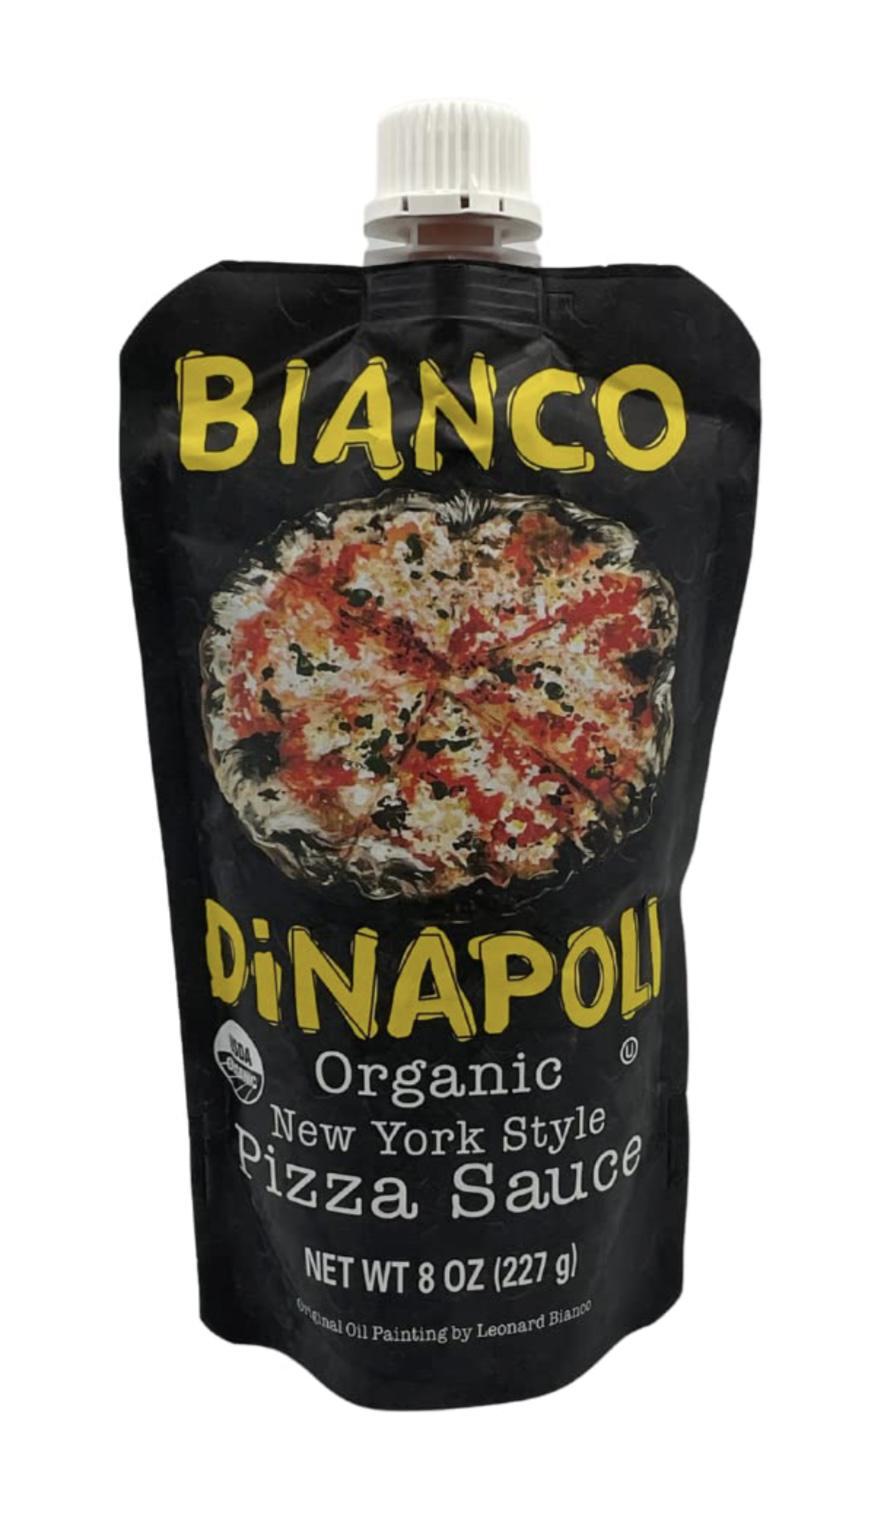 Bianco Dinapoli - Organic New York Style Pizza Sauce